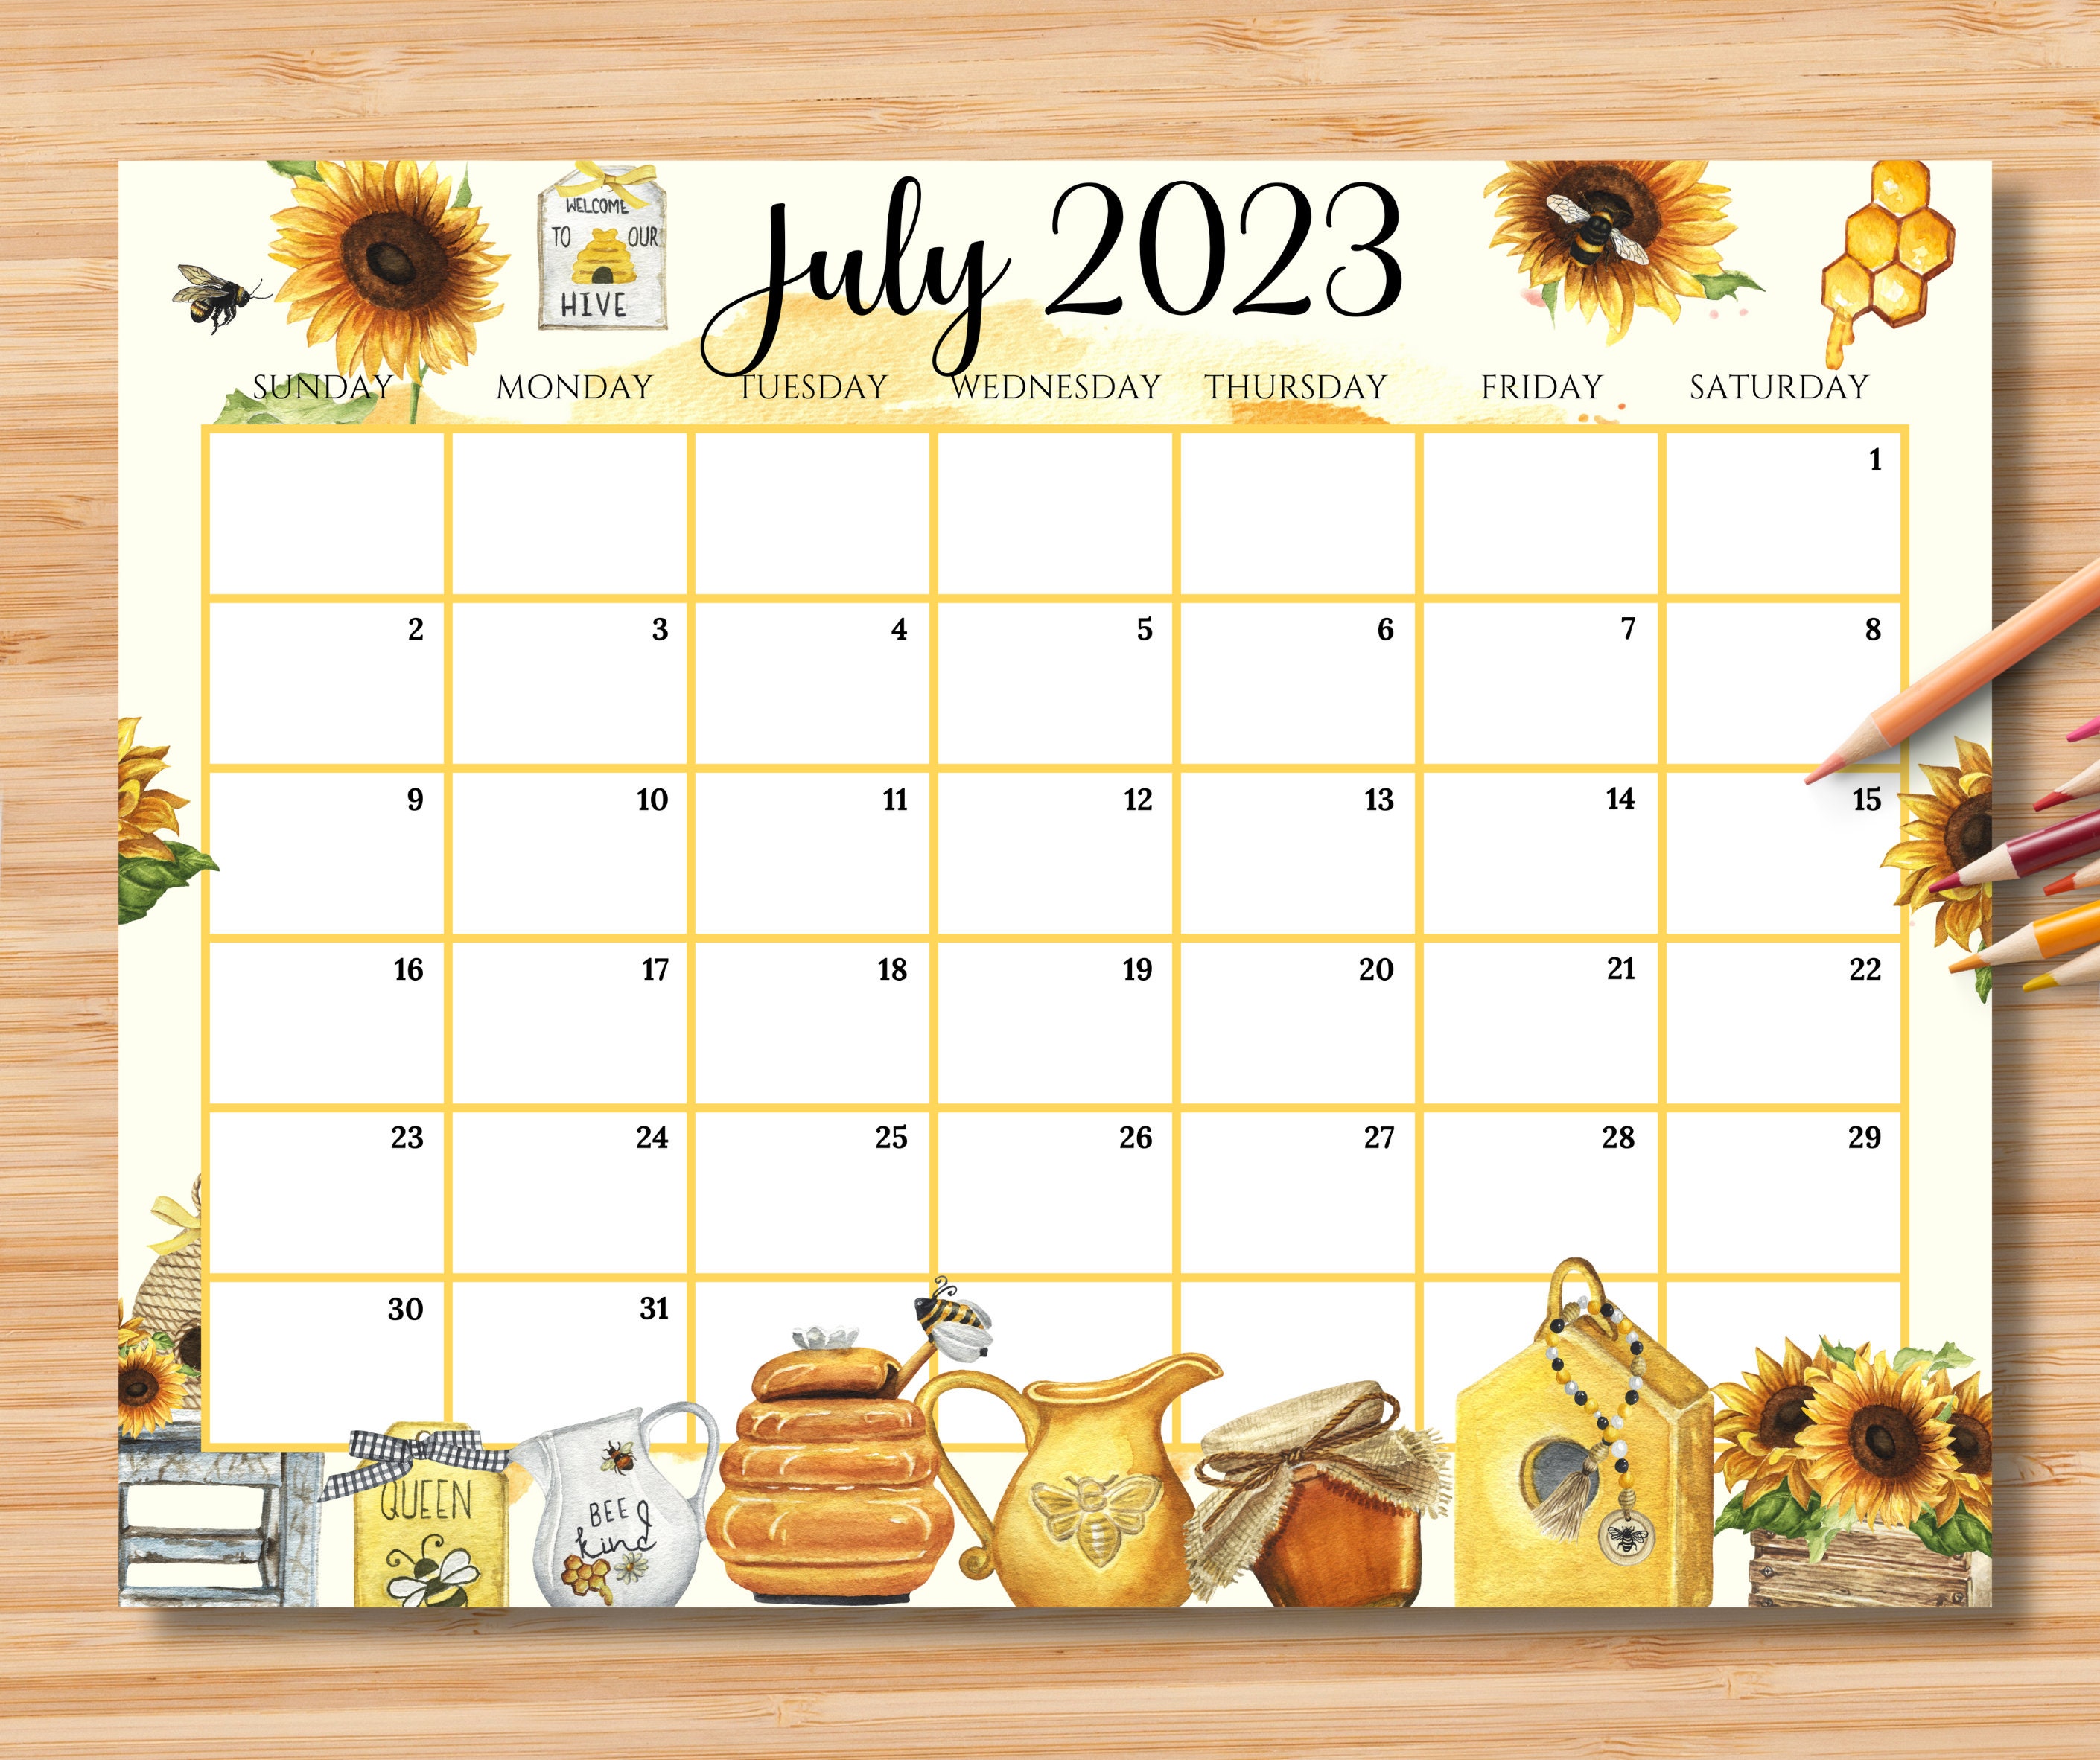 july-calendar-2023-ubicaciondepersonas-cdmx-gob-mx